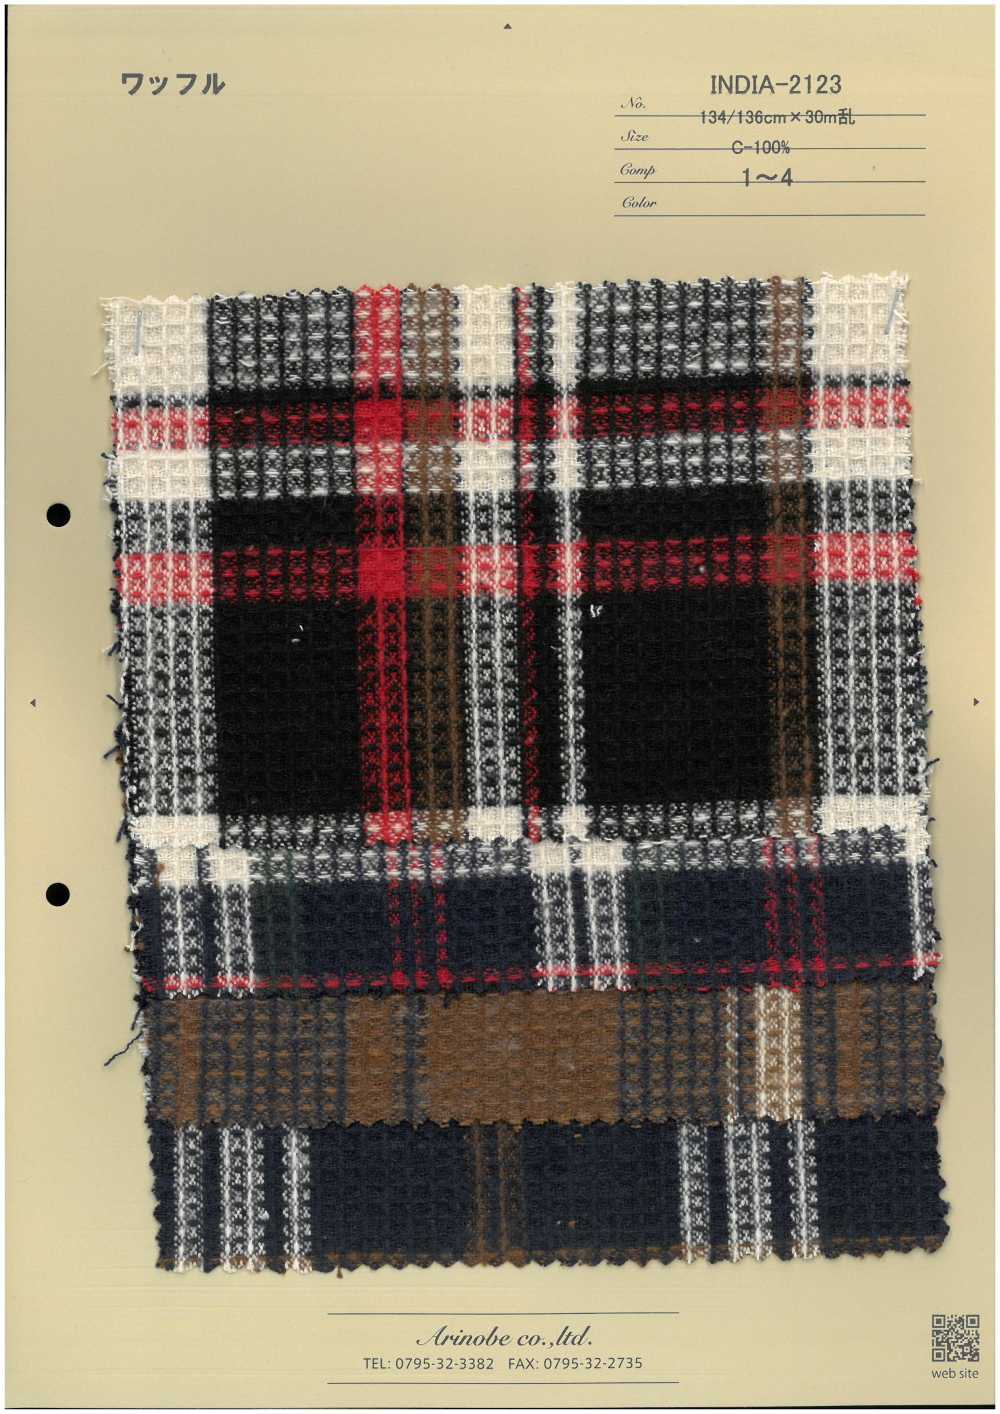 INDIA-2123 Waffelstrick[Textilgewebe] ARINOBE CO., LTD.